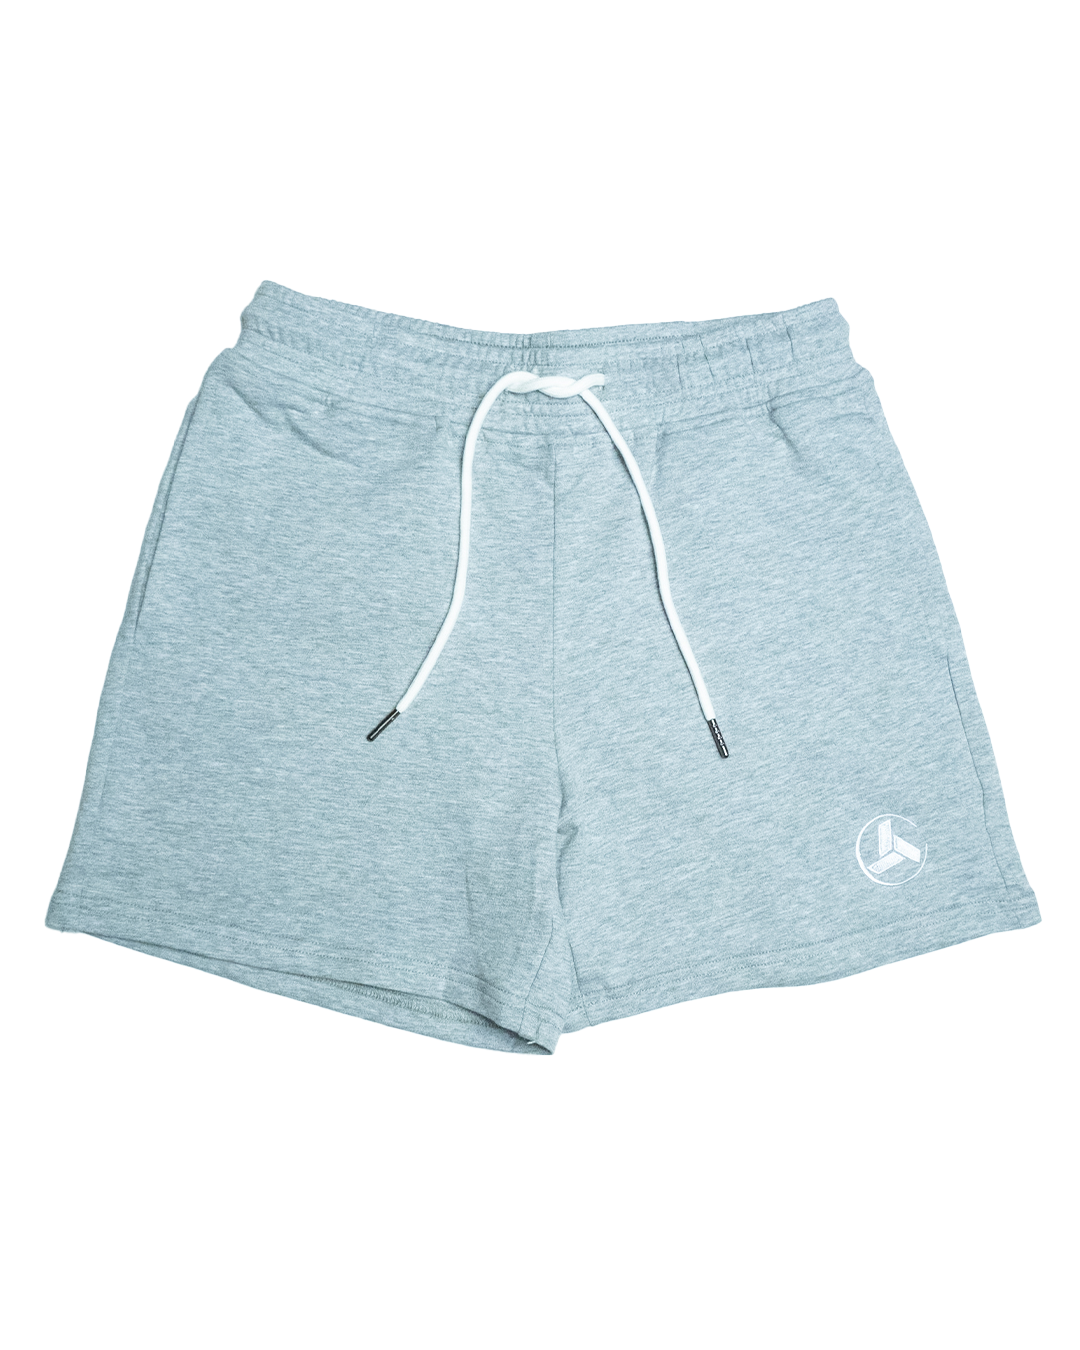 Prefect Cotton Shorts (Athletic Gray)